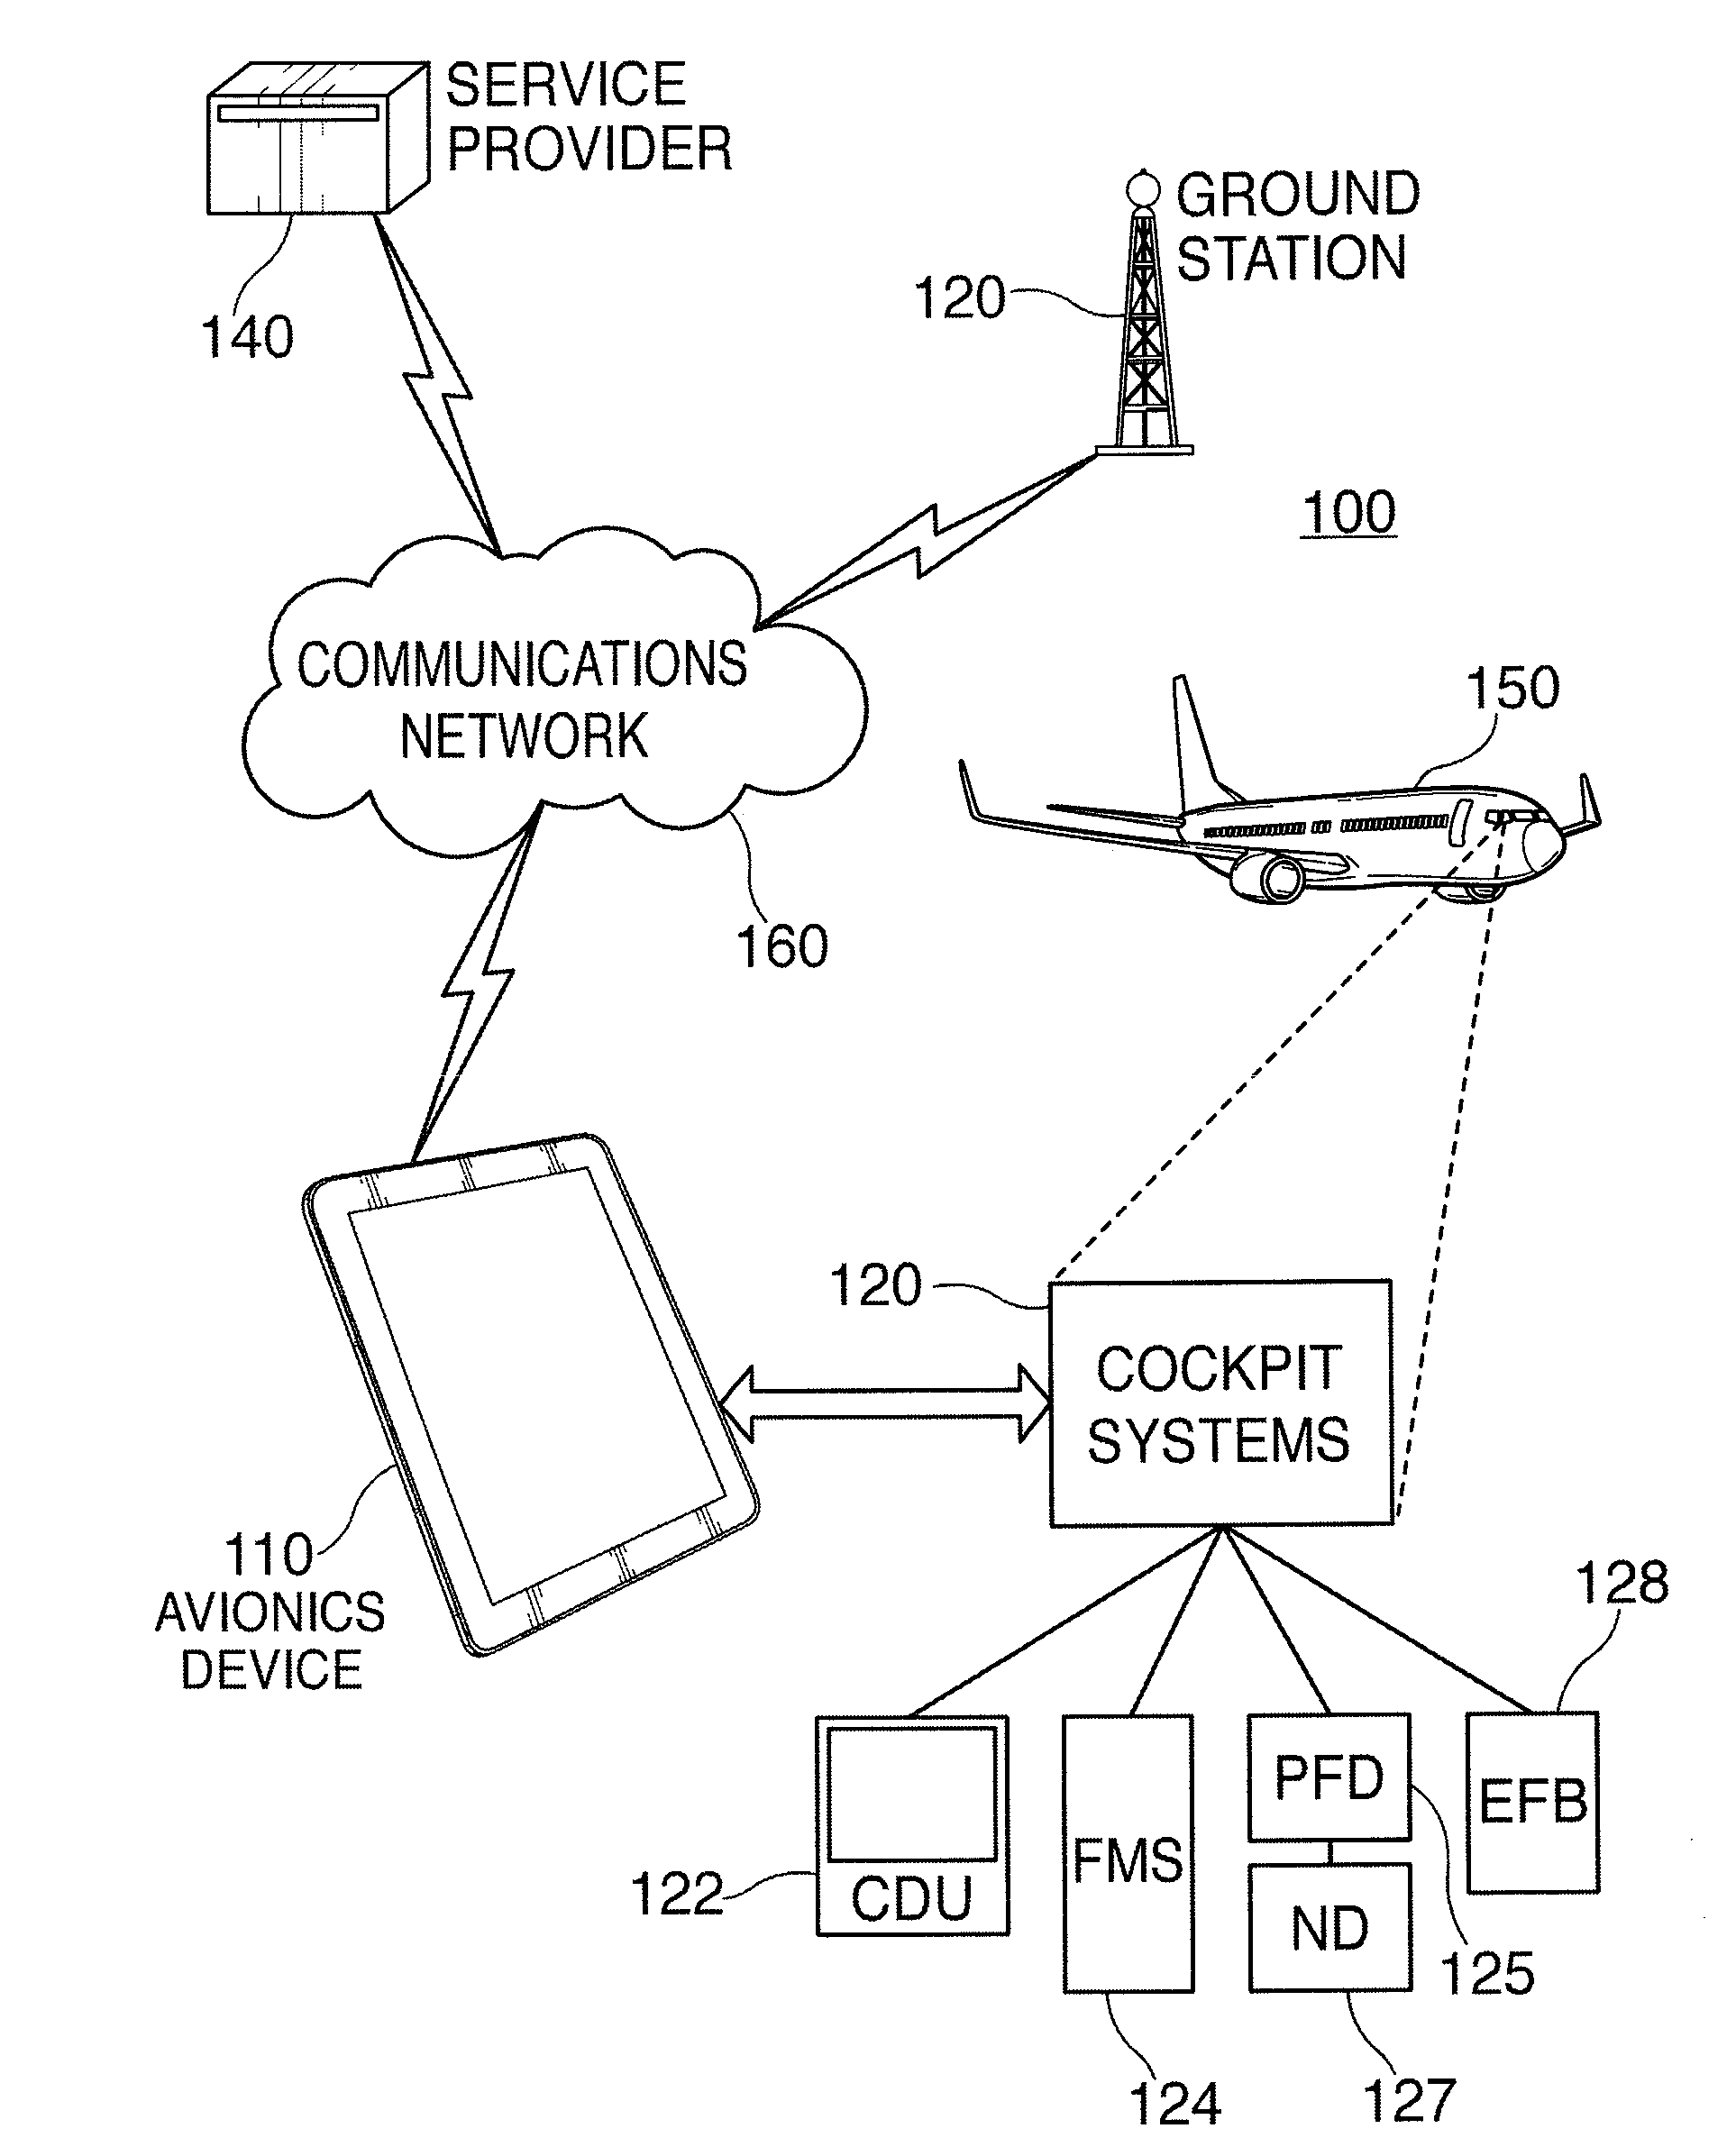 Avionics data entry devices